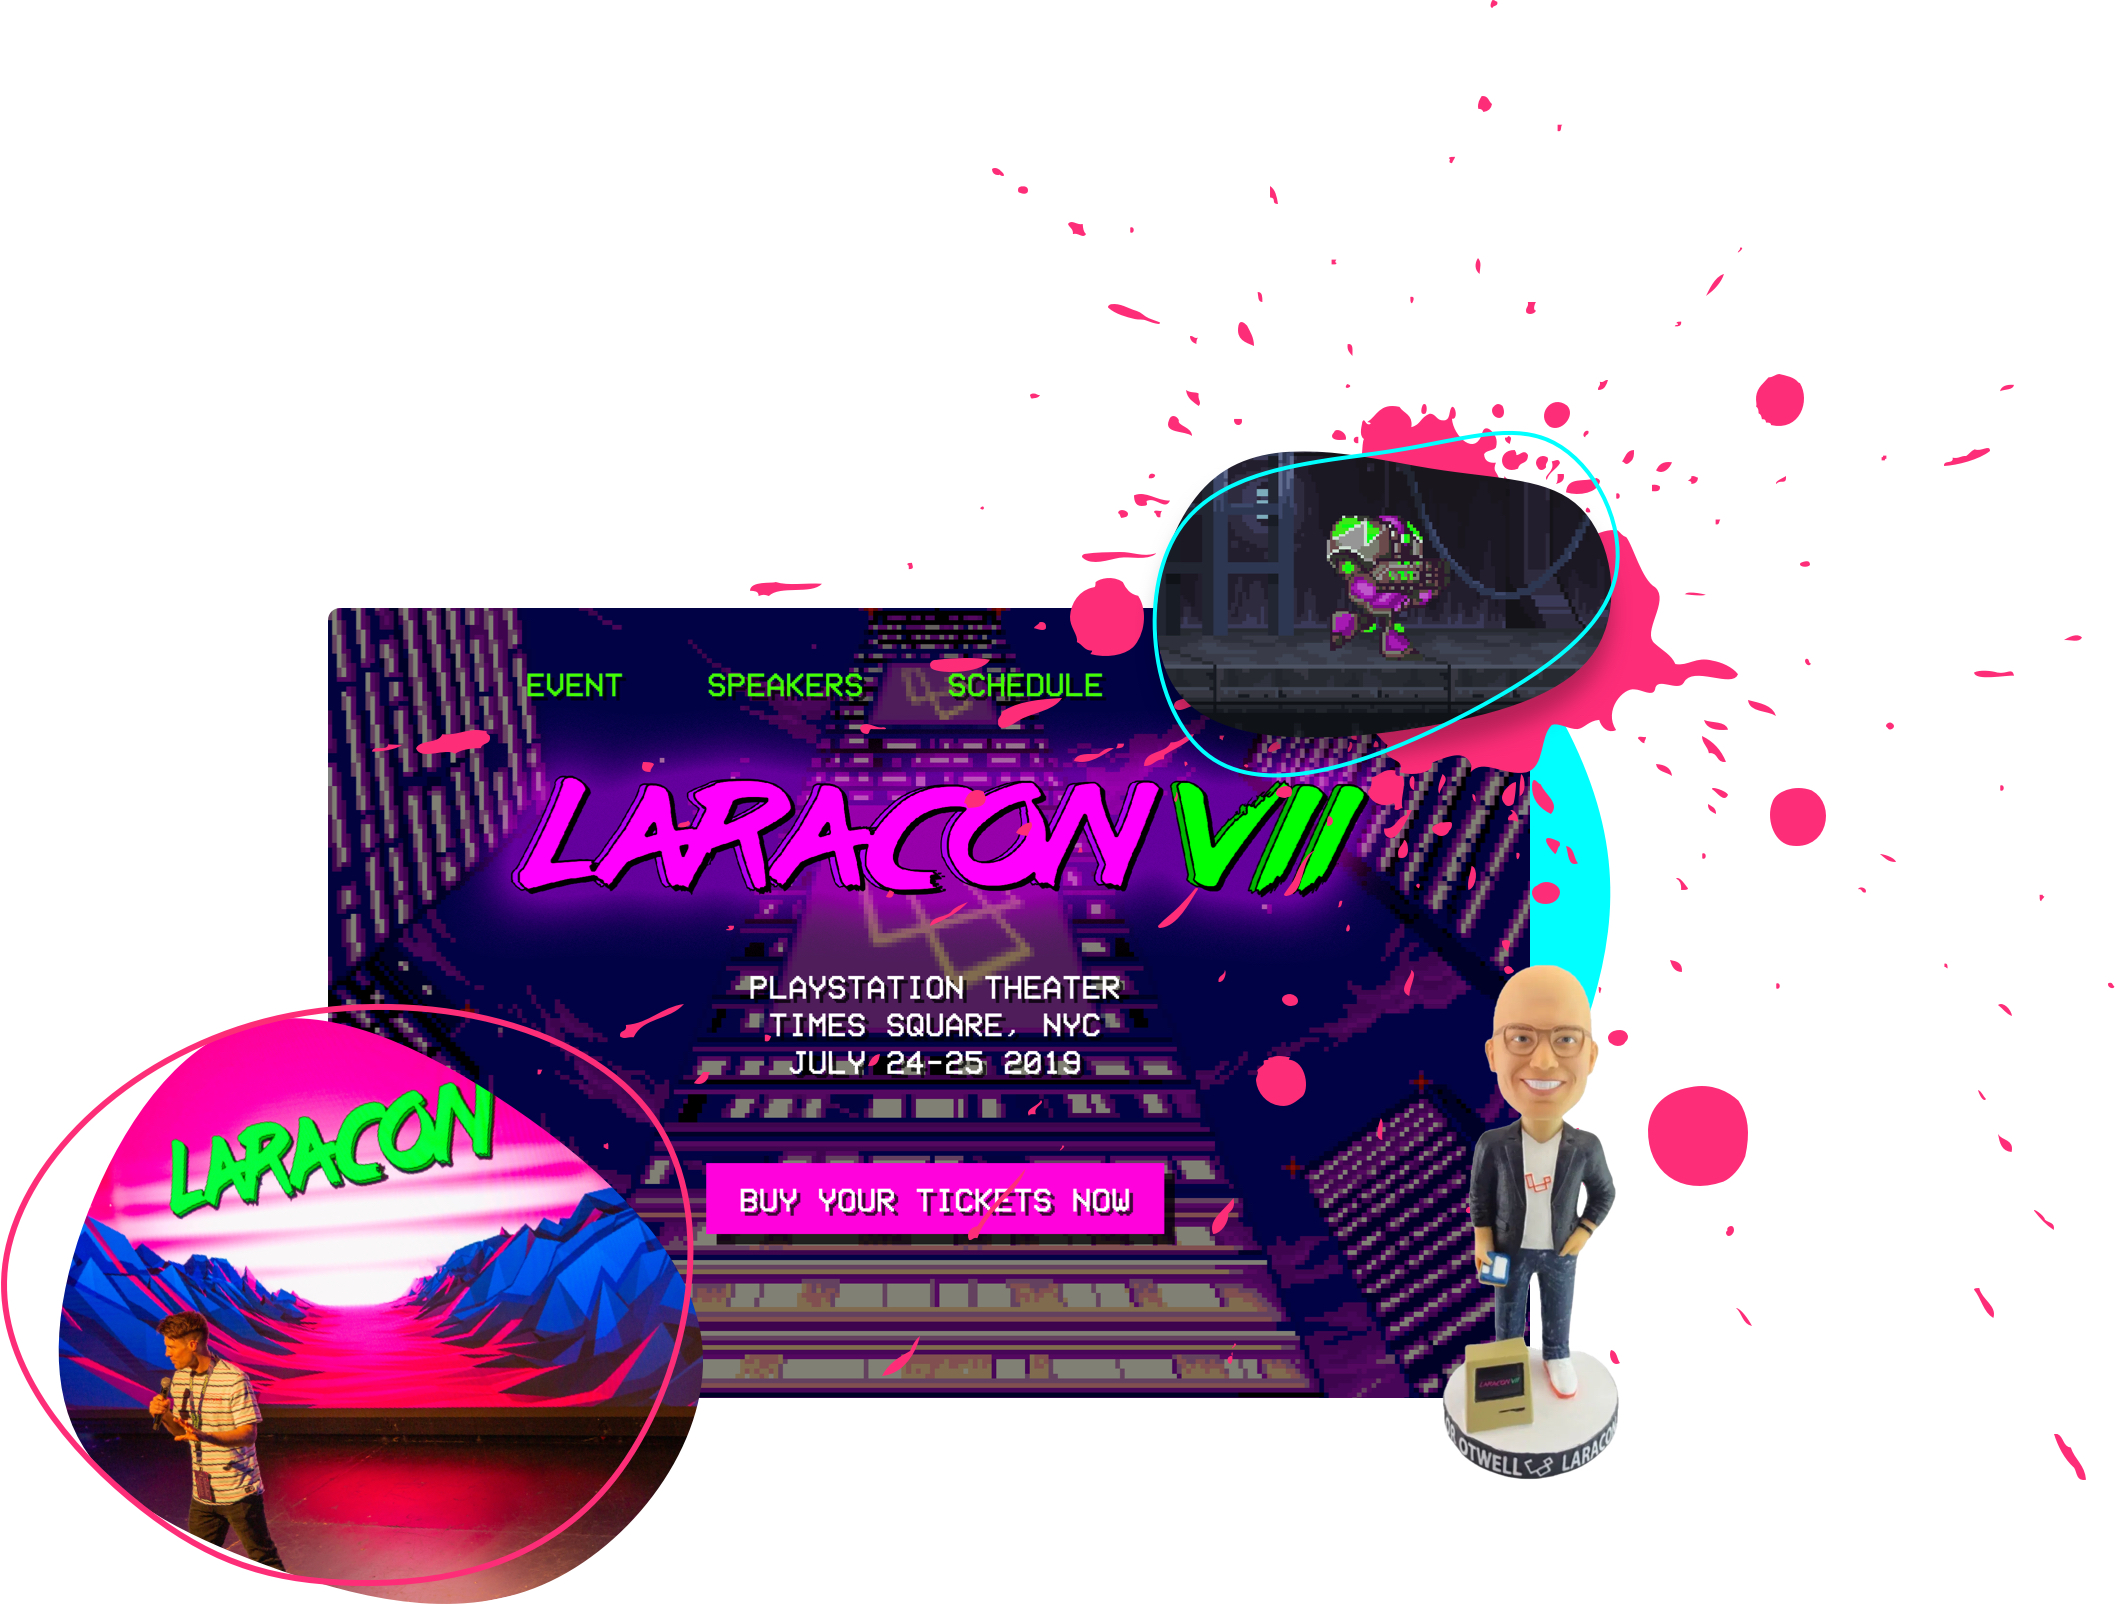 Laracon VII Website and Taylor Otwell Bobblehead